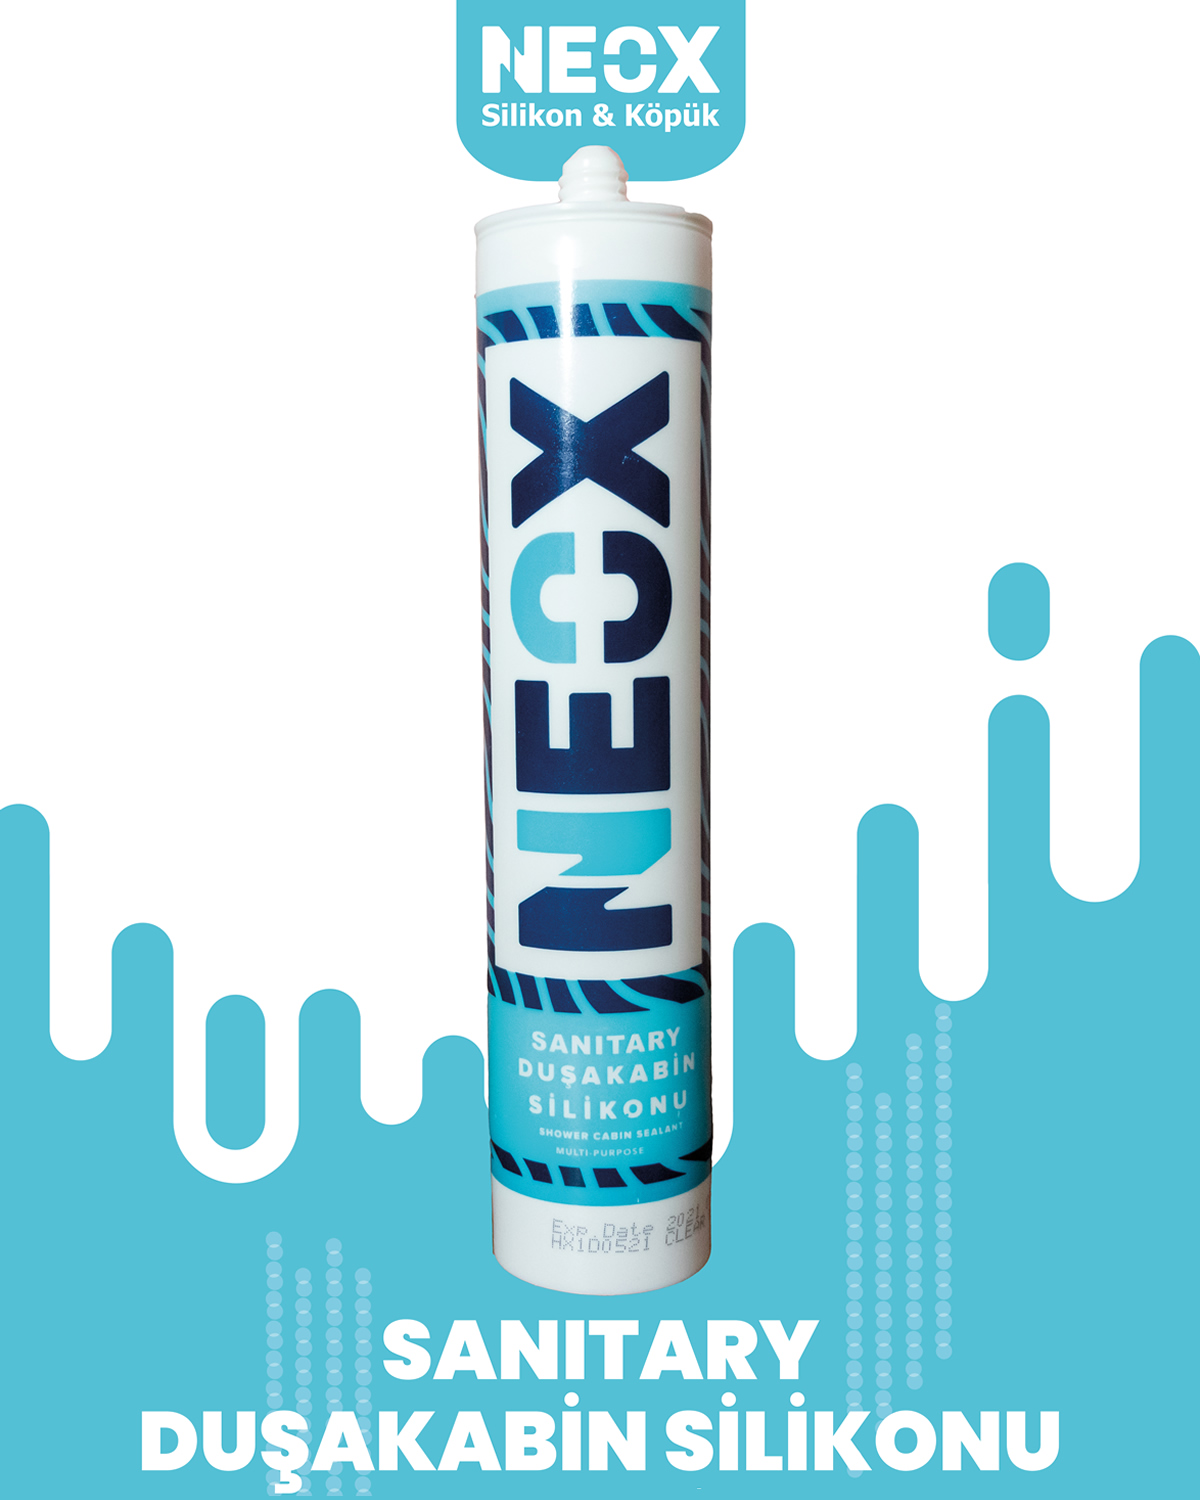 neox-dusakabin-sanitary-silikonu